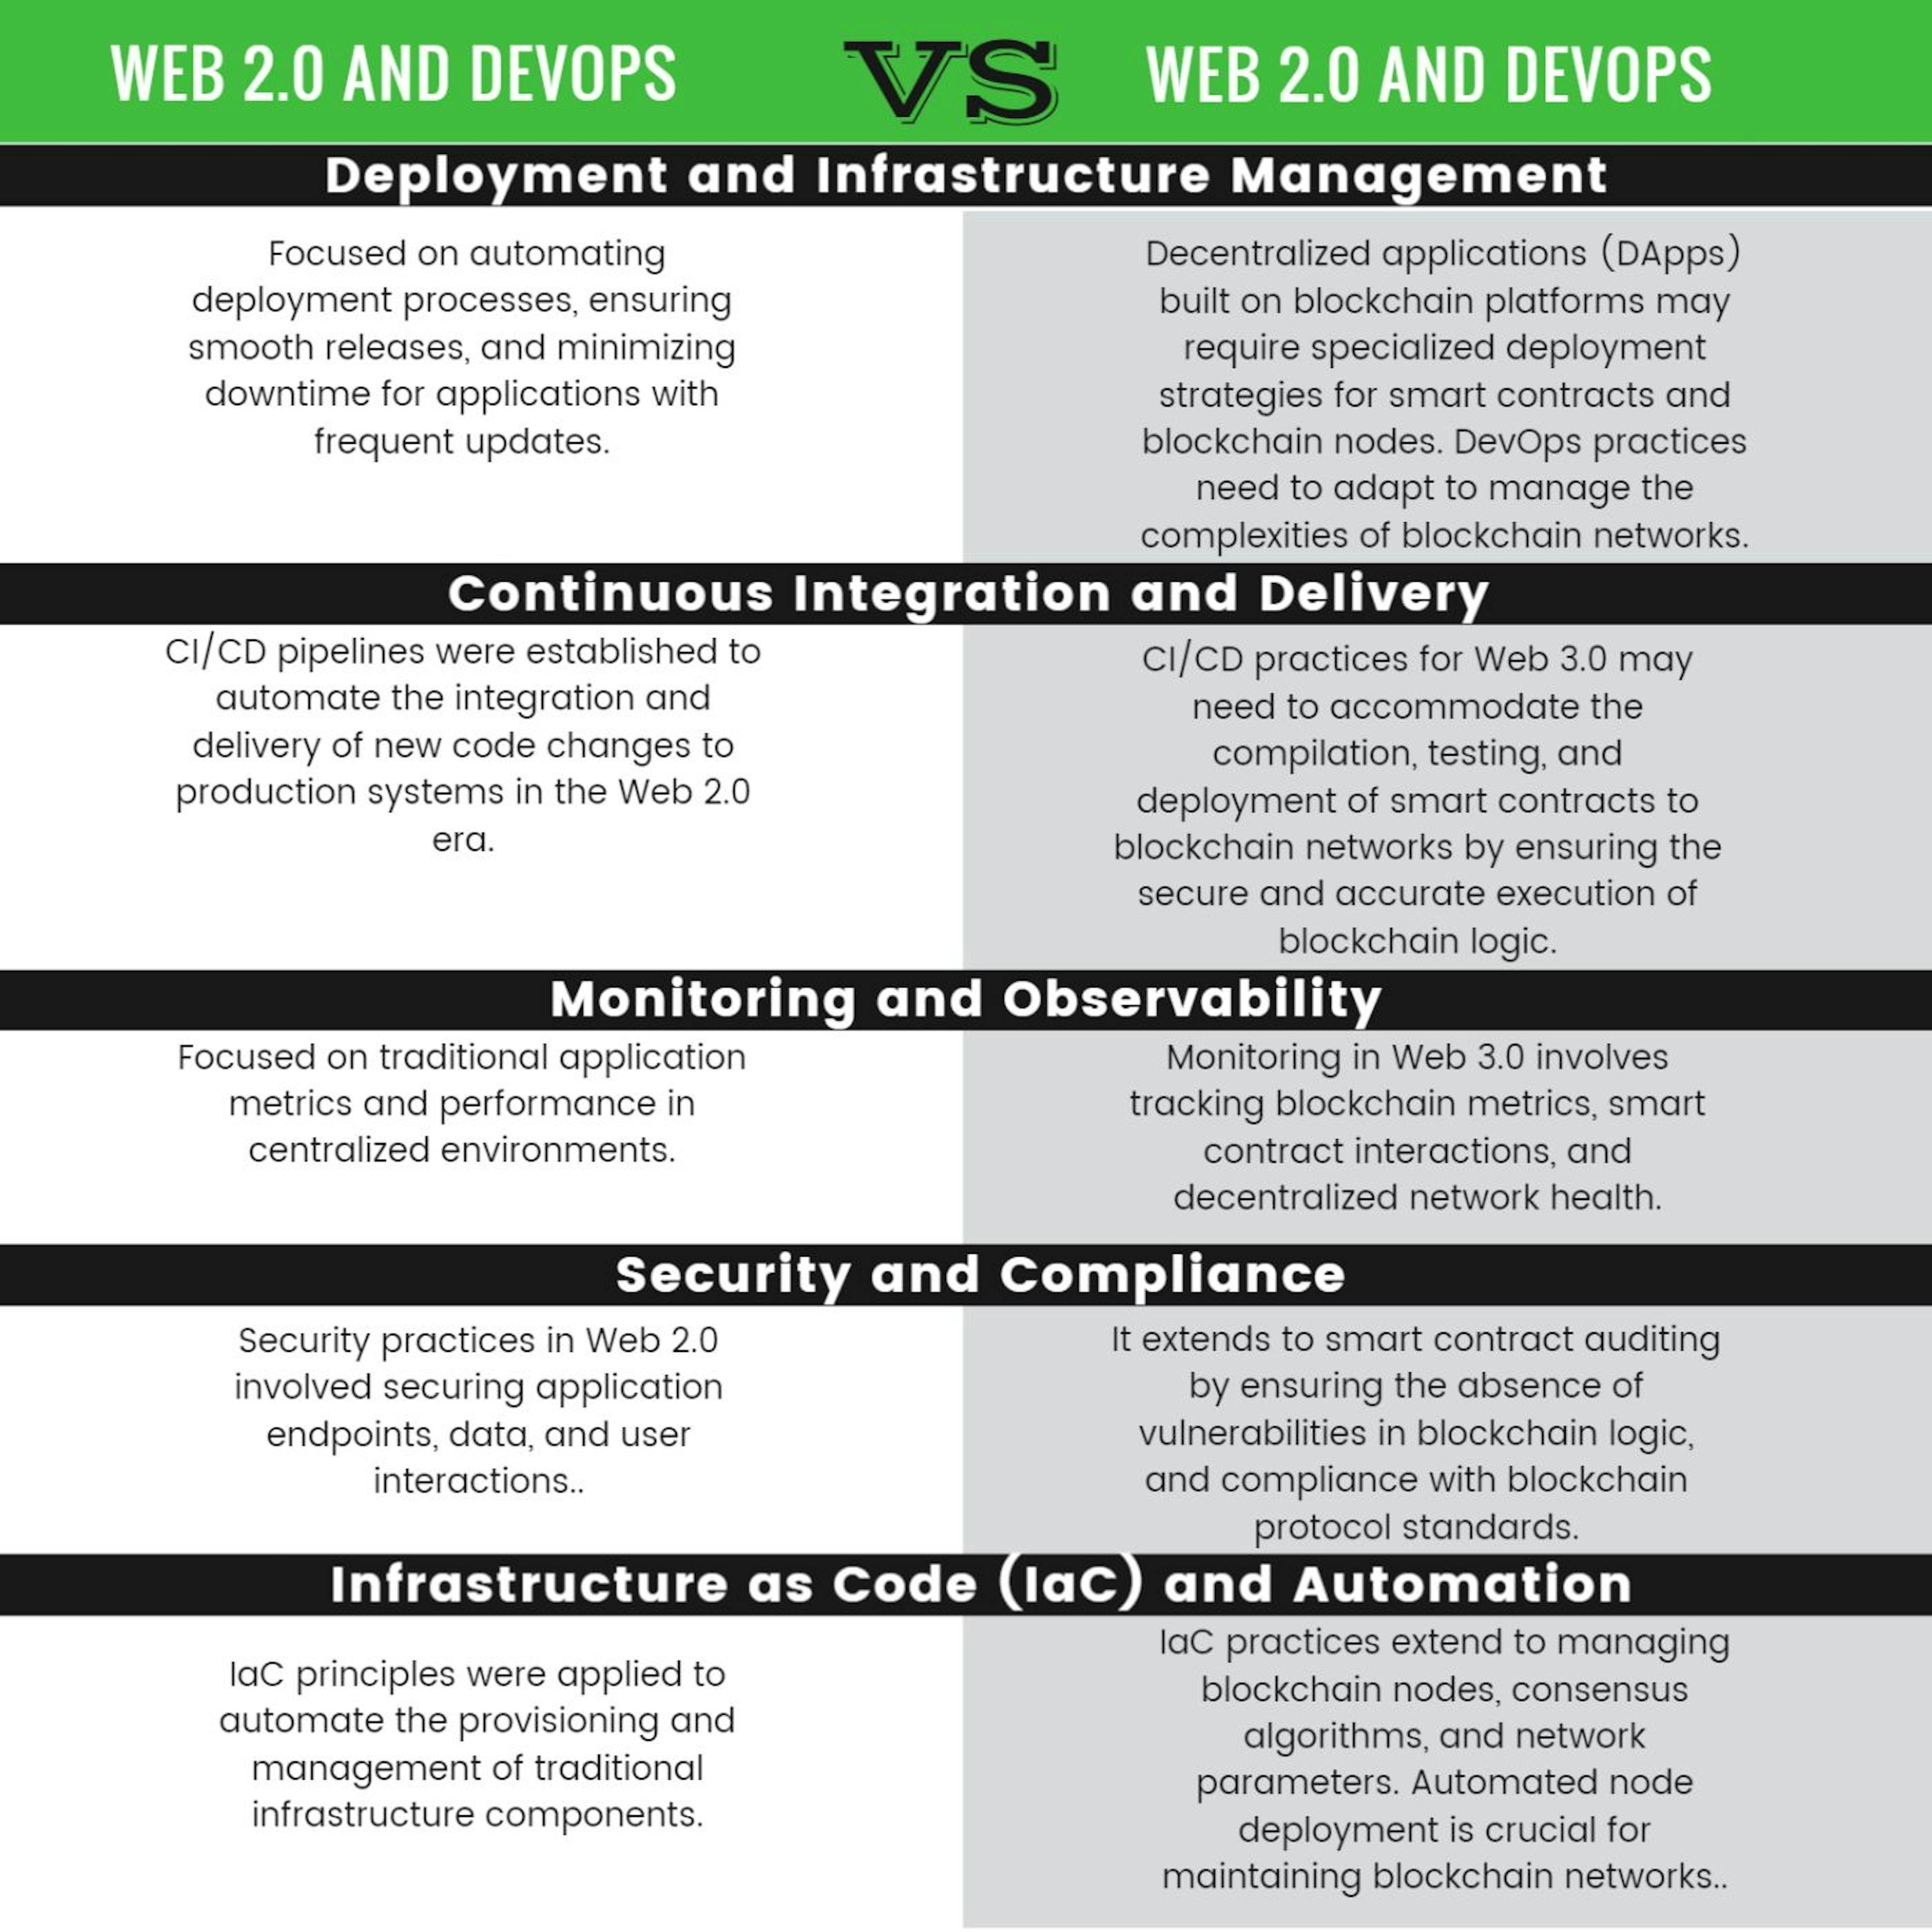 Figure: DevOps of Web 2.0 and Web 3.0 comparison